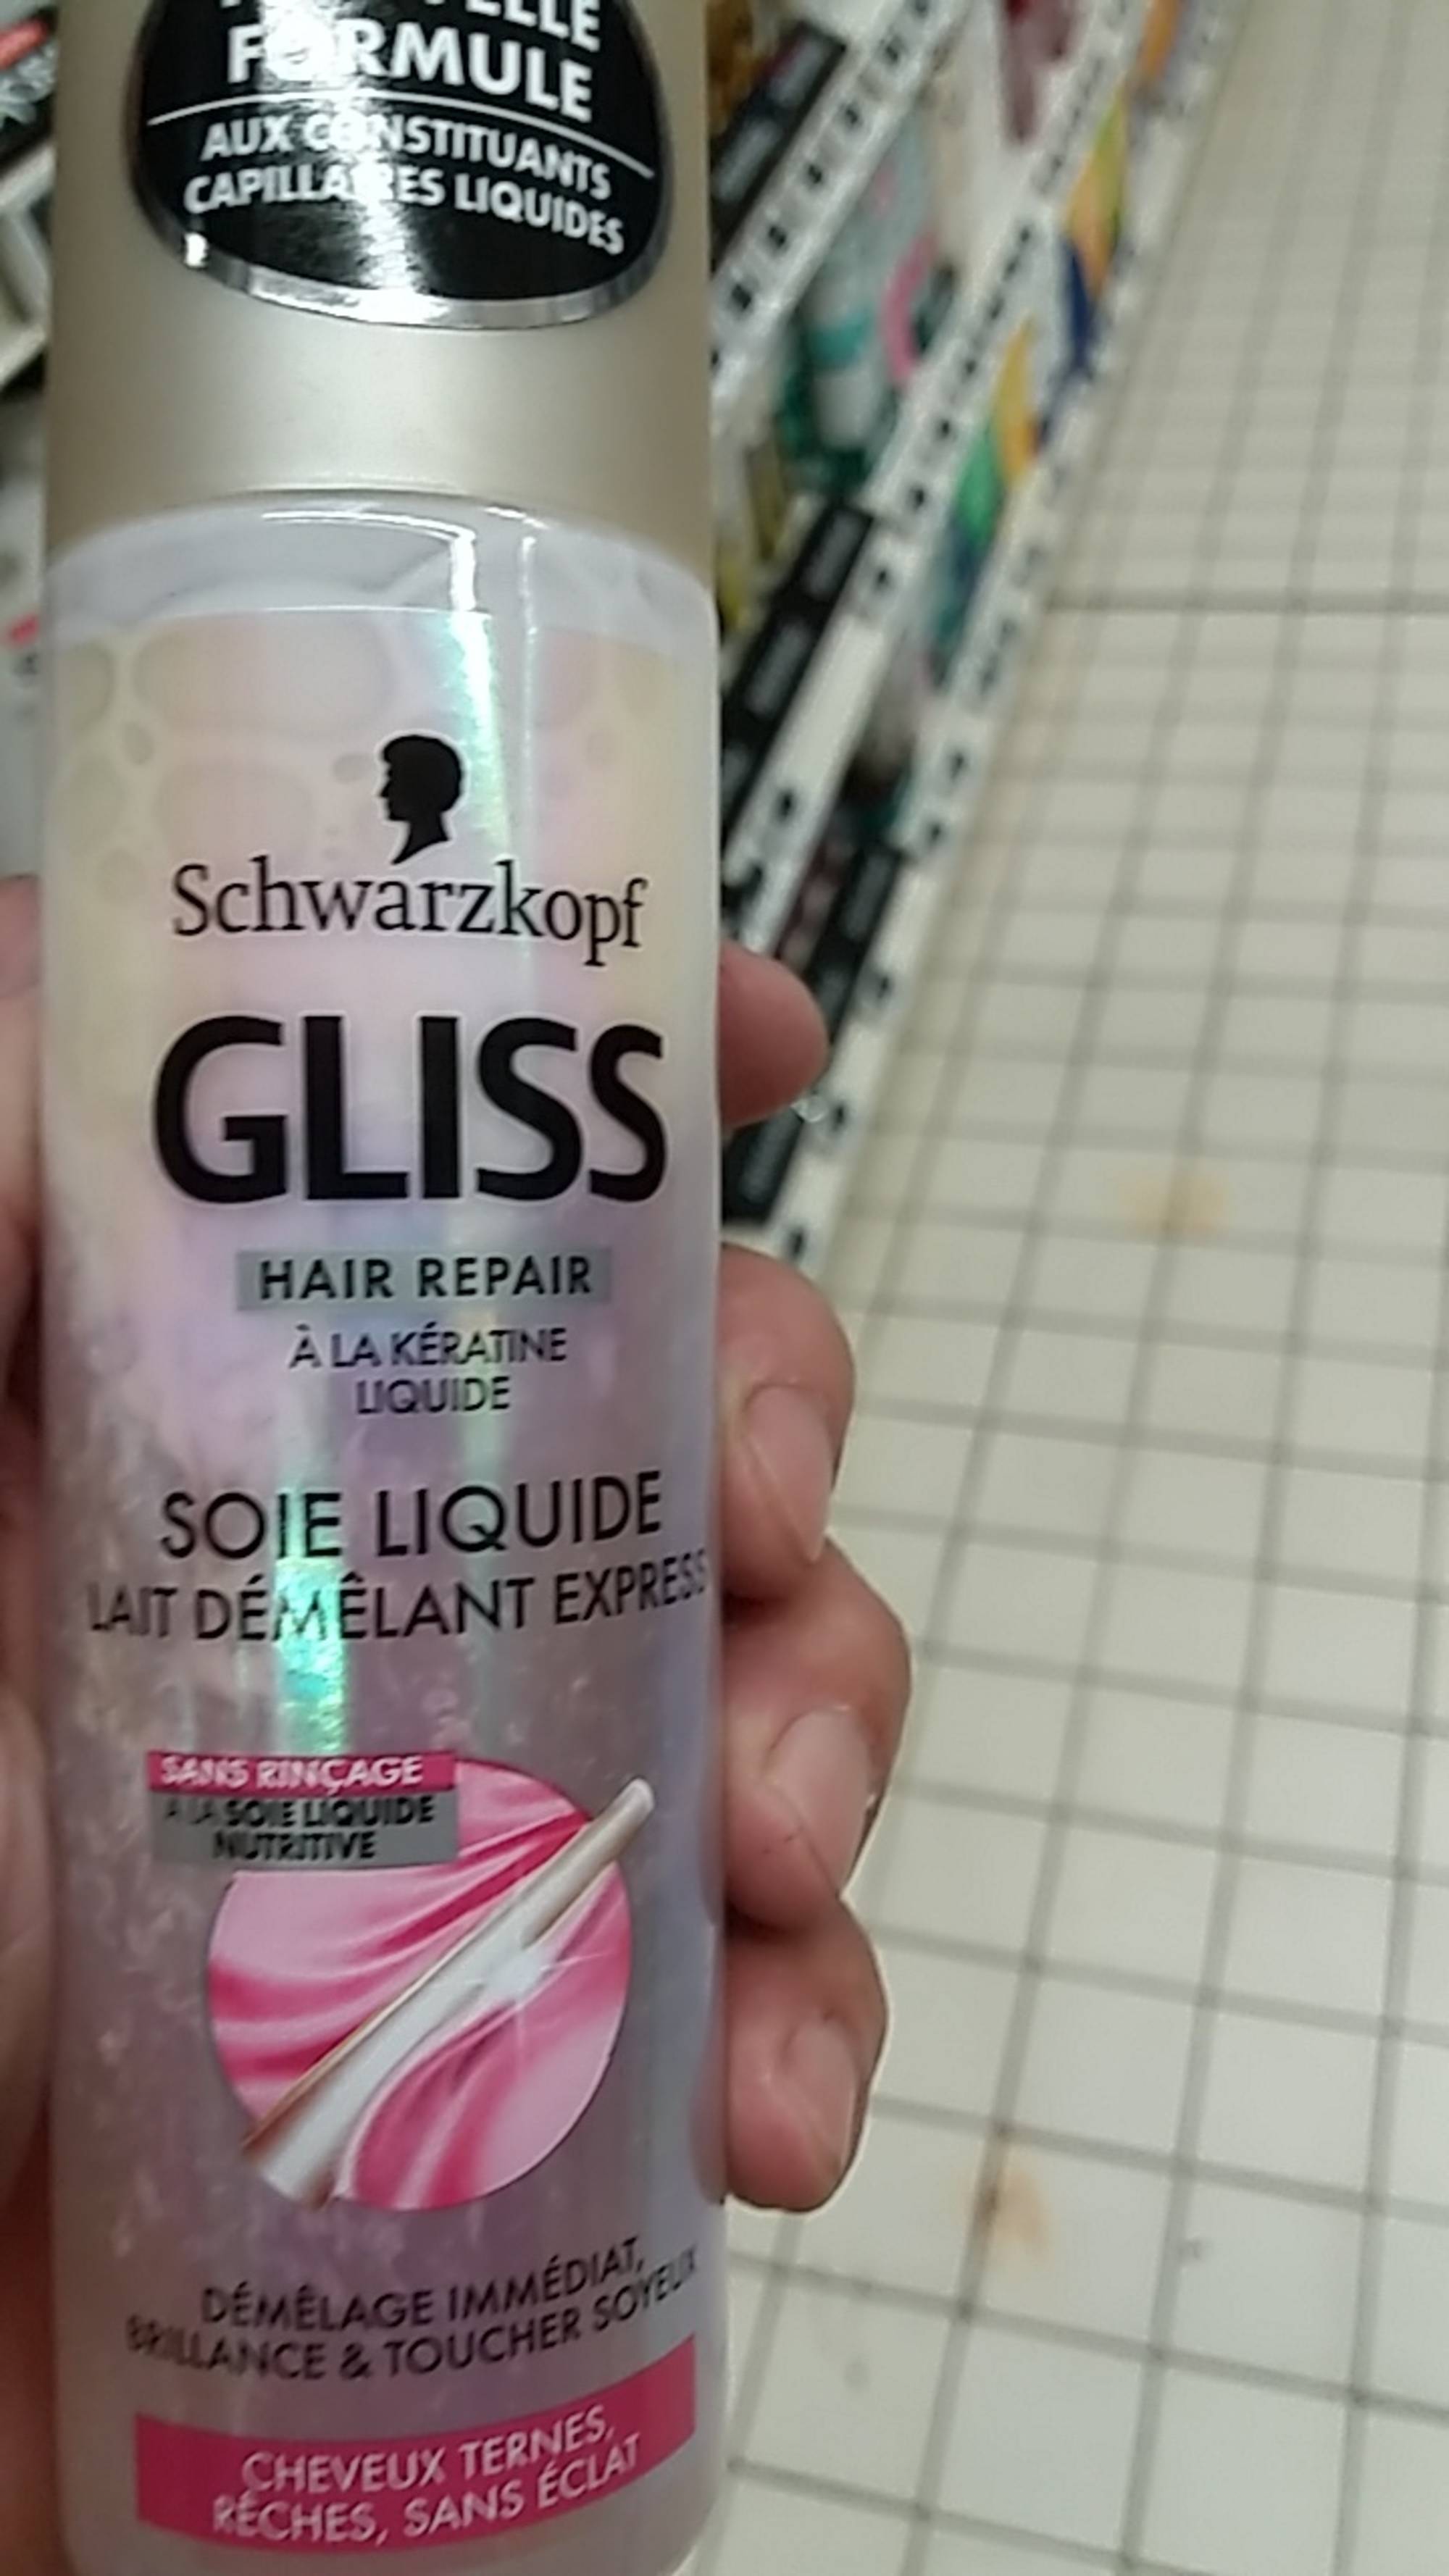 SCHWARZKOPF - Gliss hair repair soie liquide lait démêlant express